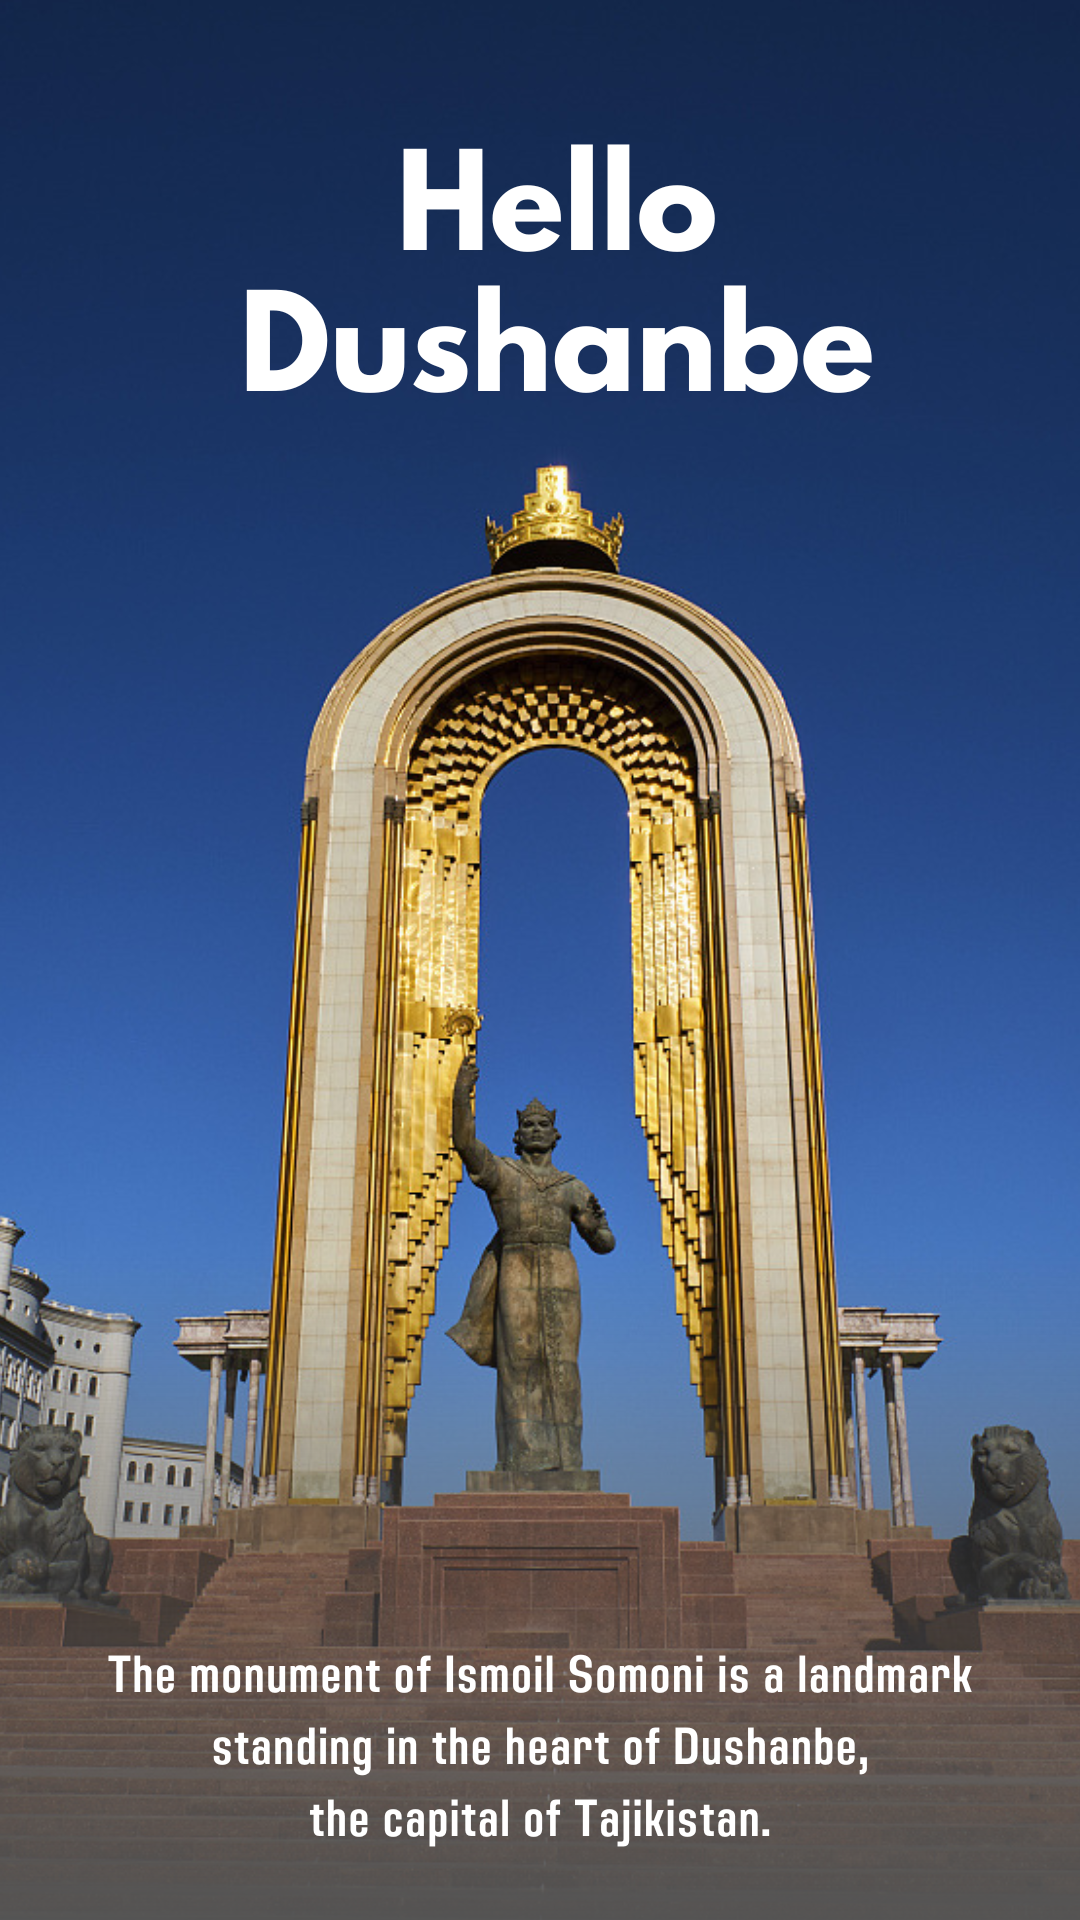 Tajikistan's iconic statue symbolizes glorious history